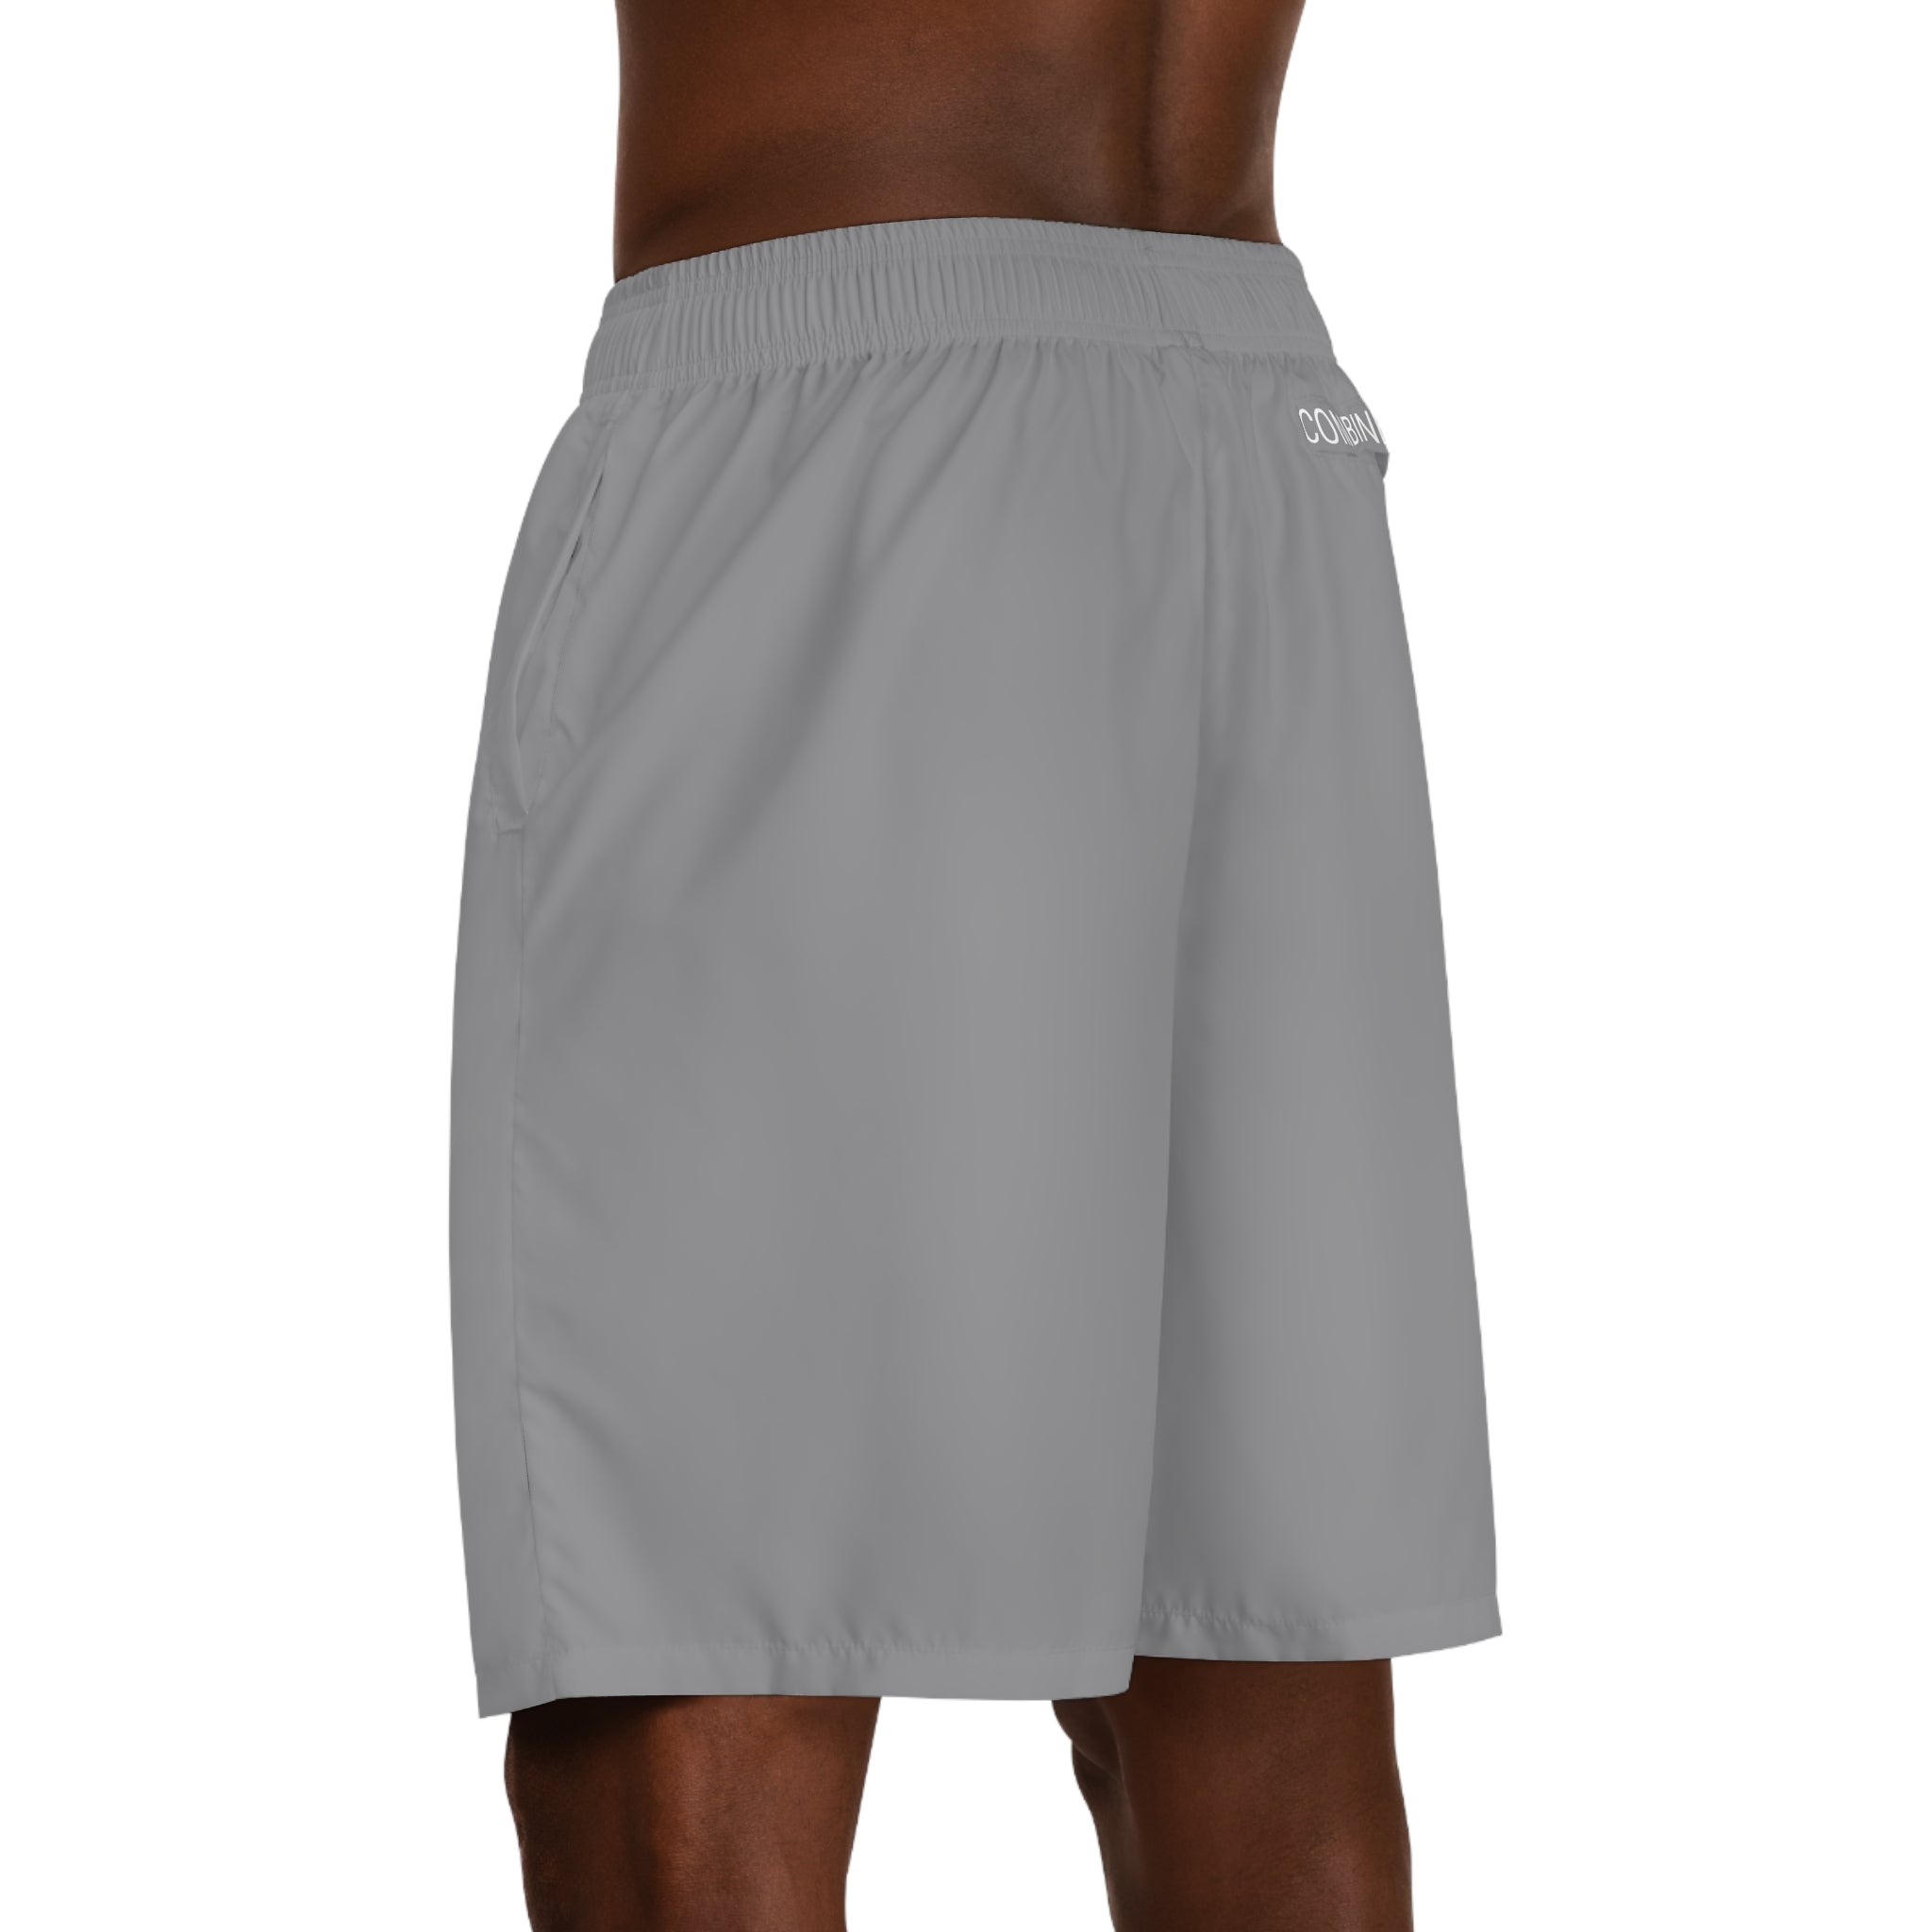 CombinedMinds Men's Jogger Shorts Grey/White Logo